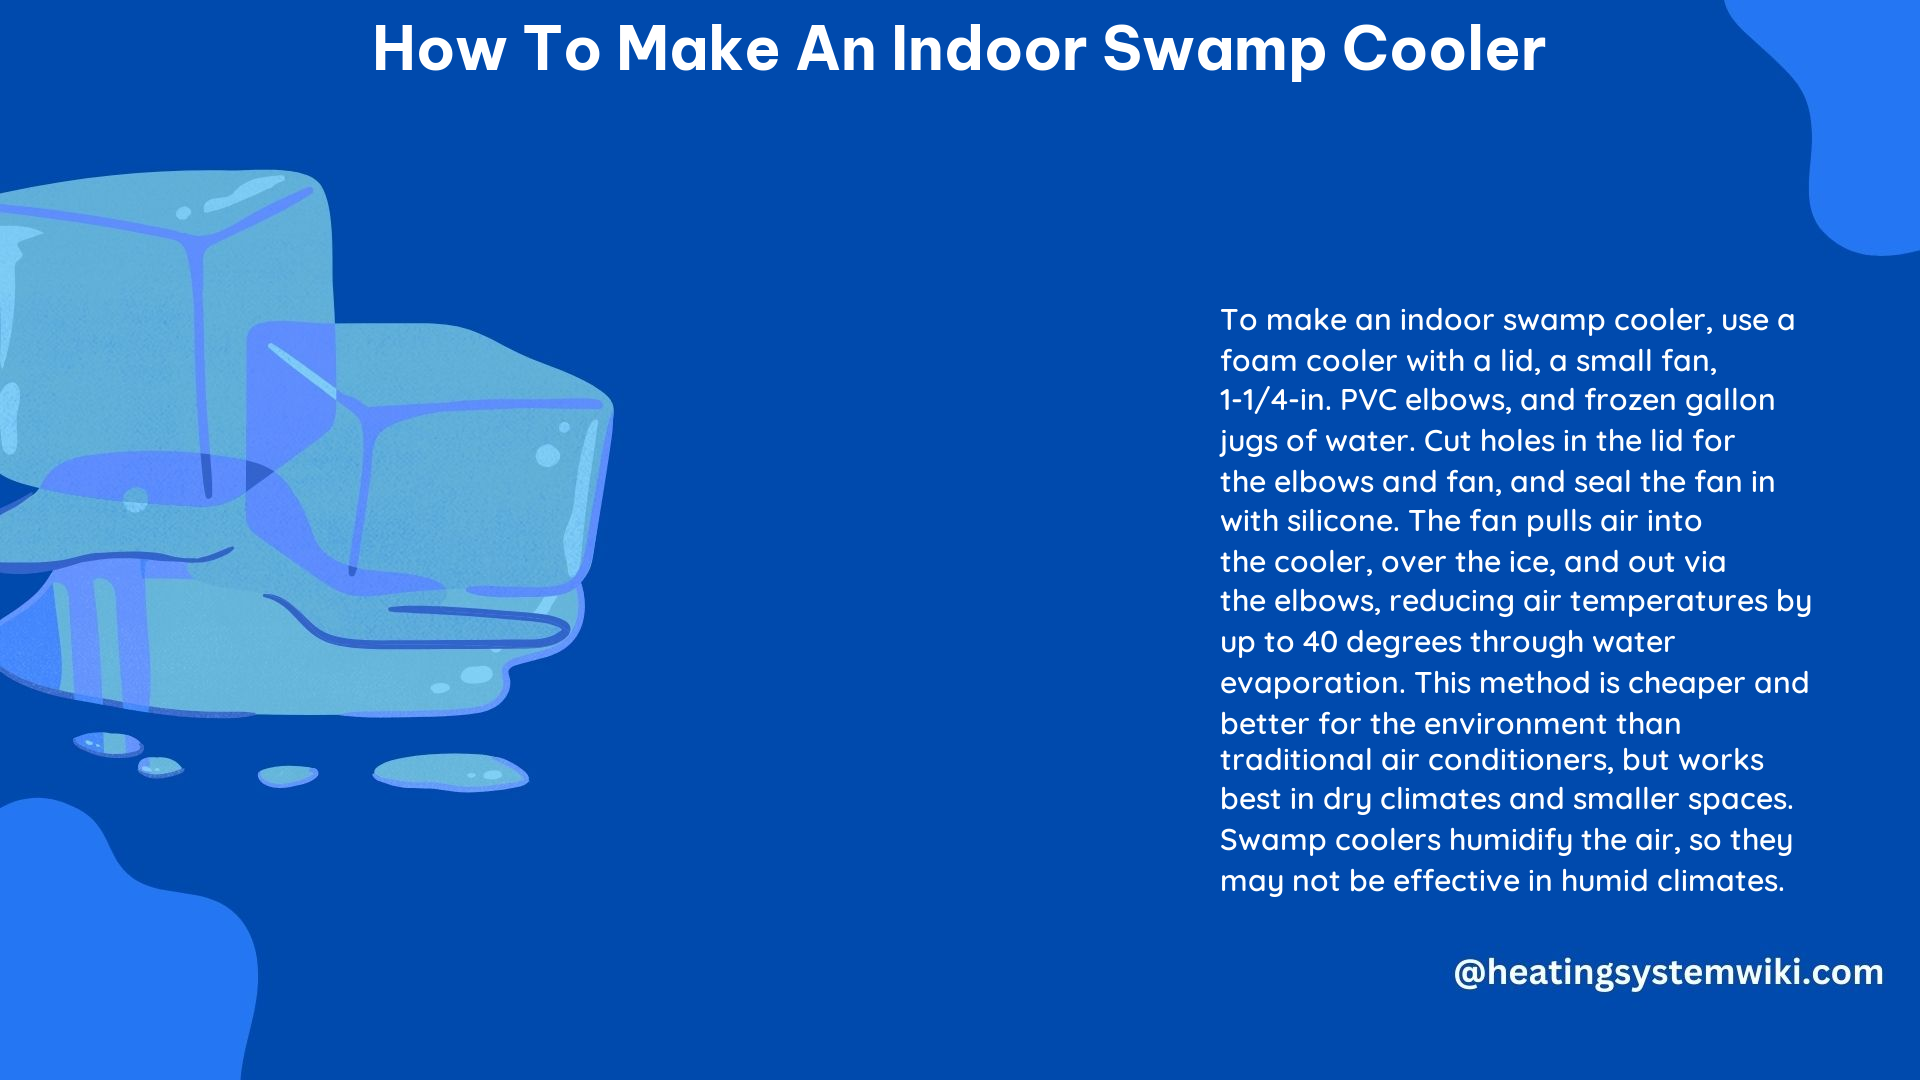 How to Make an Indoor Swamp Cooler